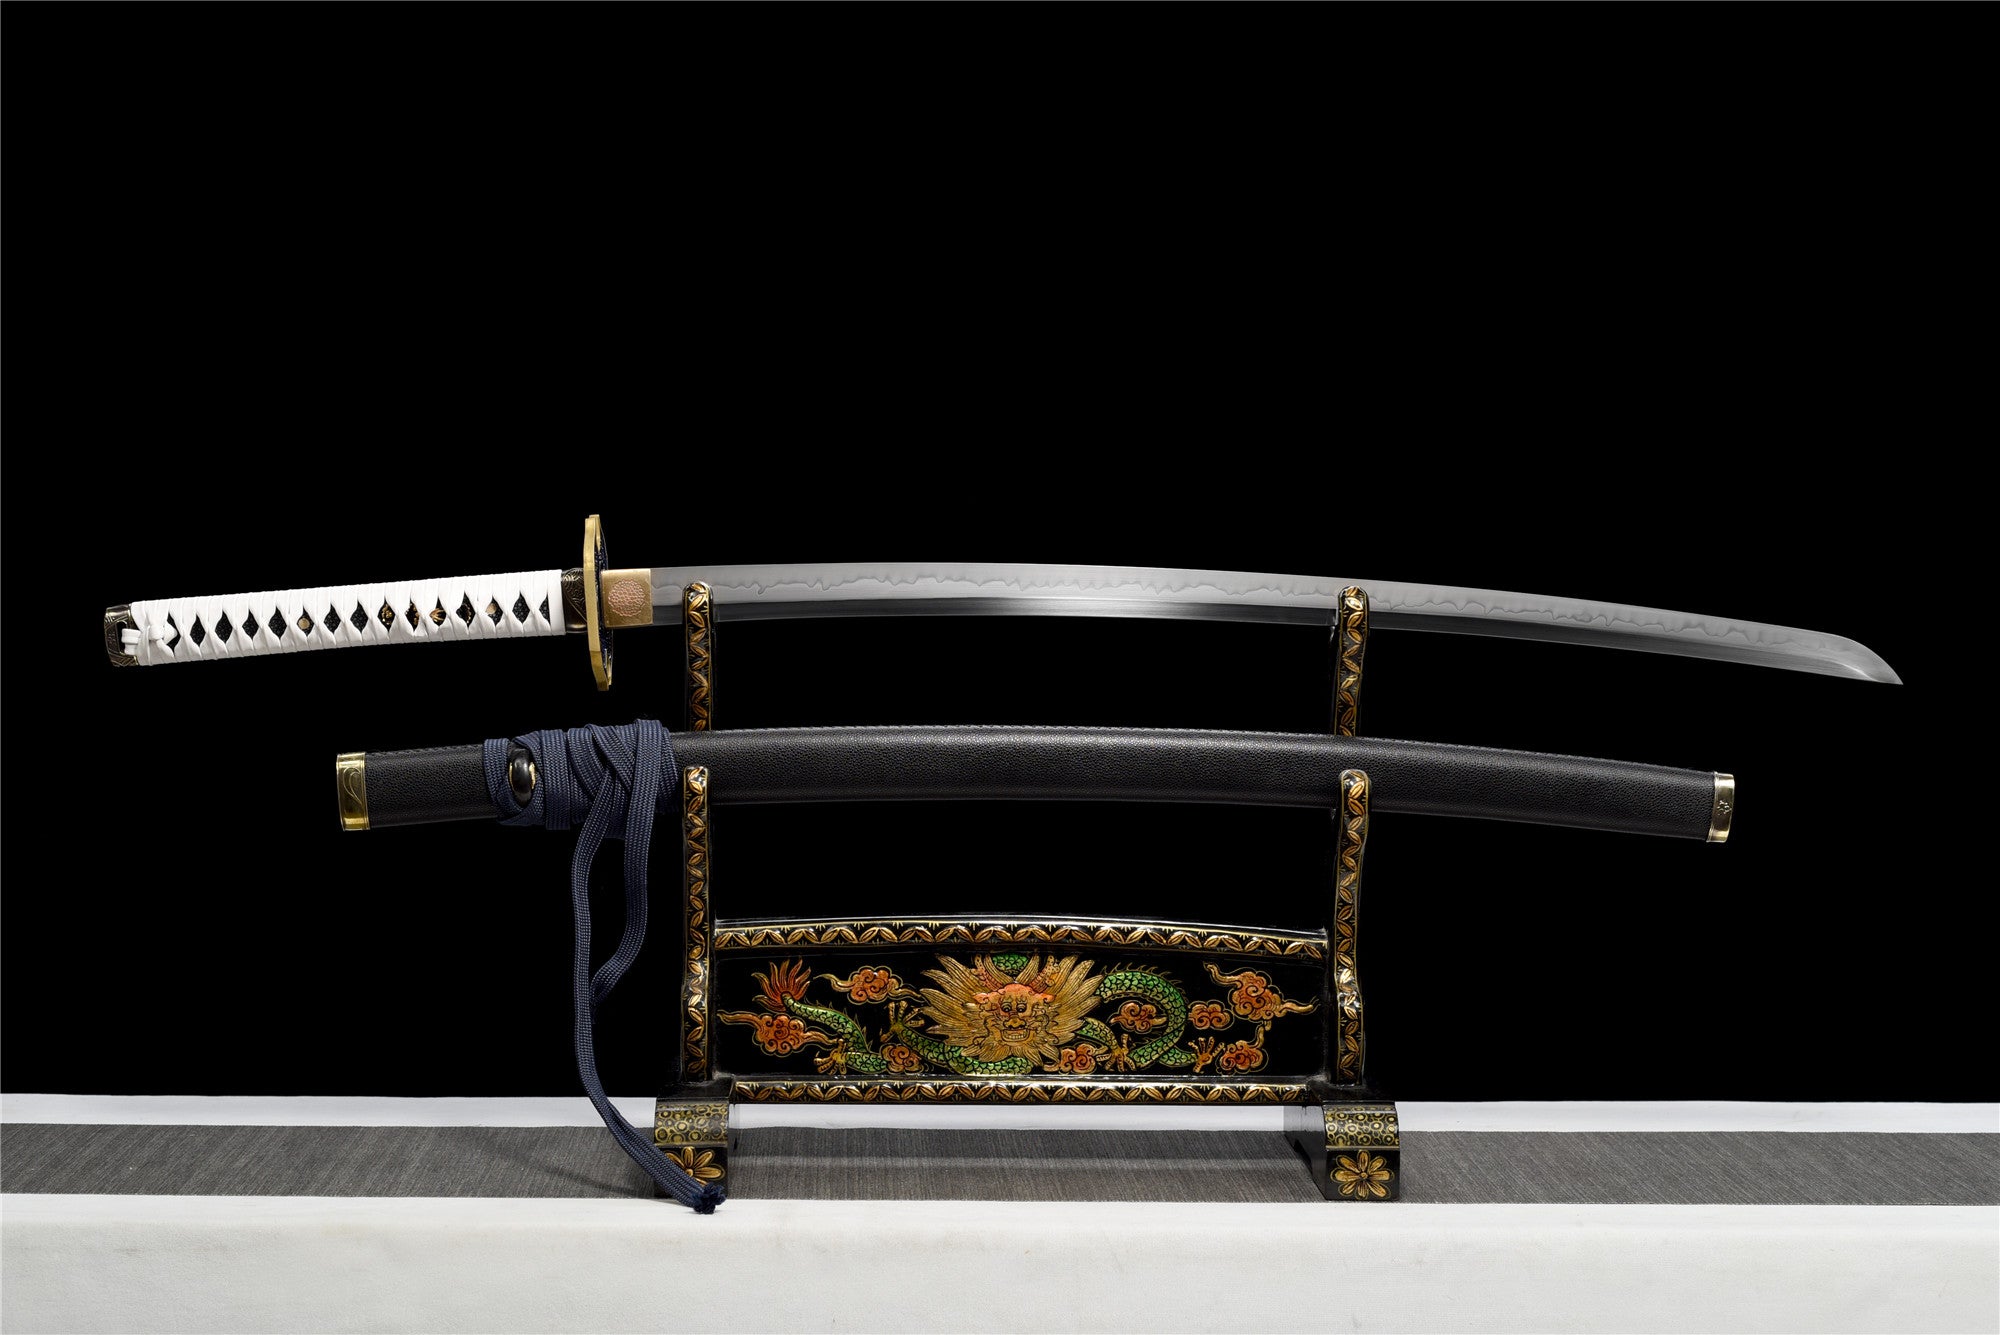 Anime Yamato Katana Sword,Devil May Cry 5 Vergil Sword,Real Handmade Japanese Samurai Sword,T10 Steel Clay Tempered With Hamon